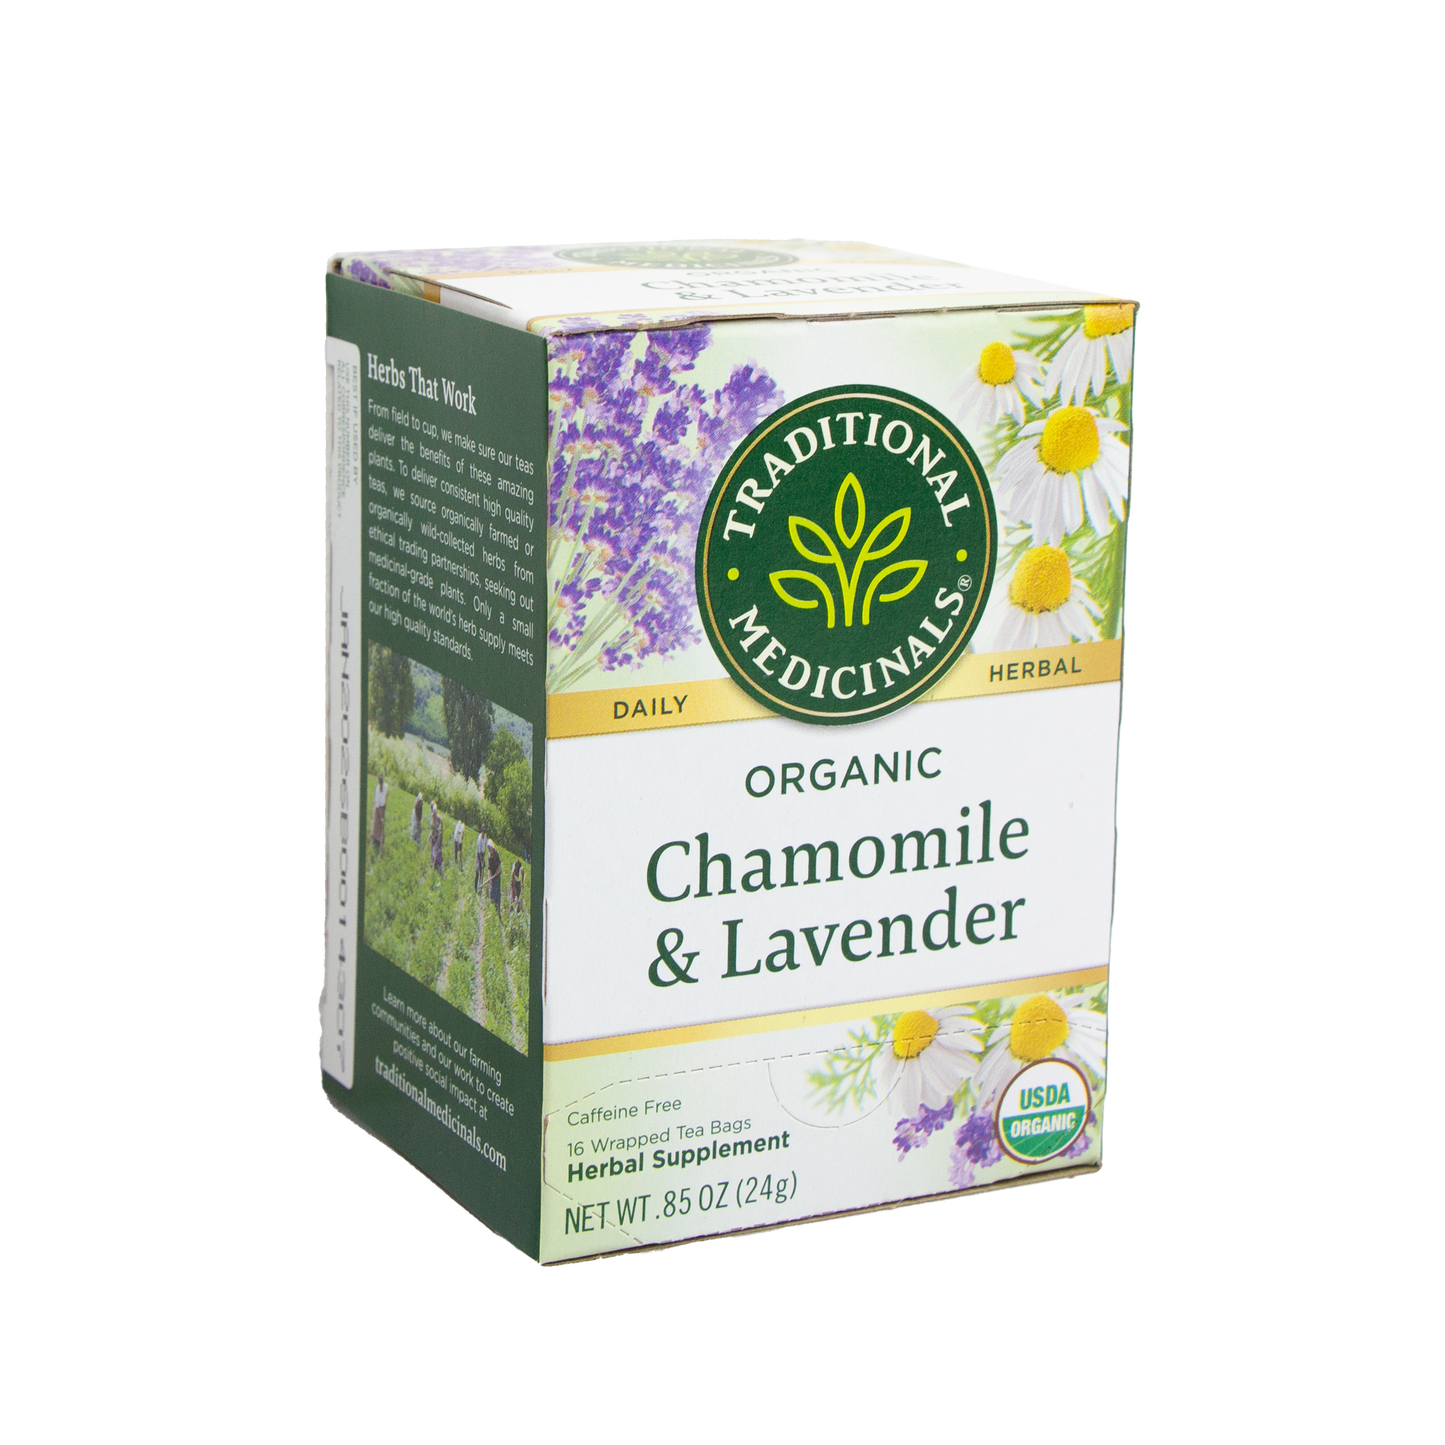 Traditional Medicinals - Organic Chamomile & Lavendar